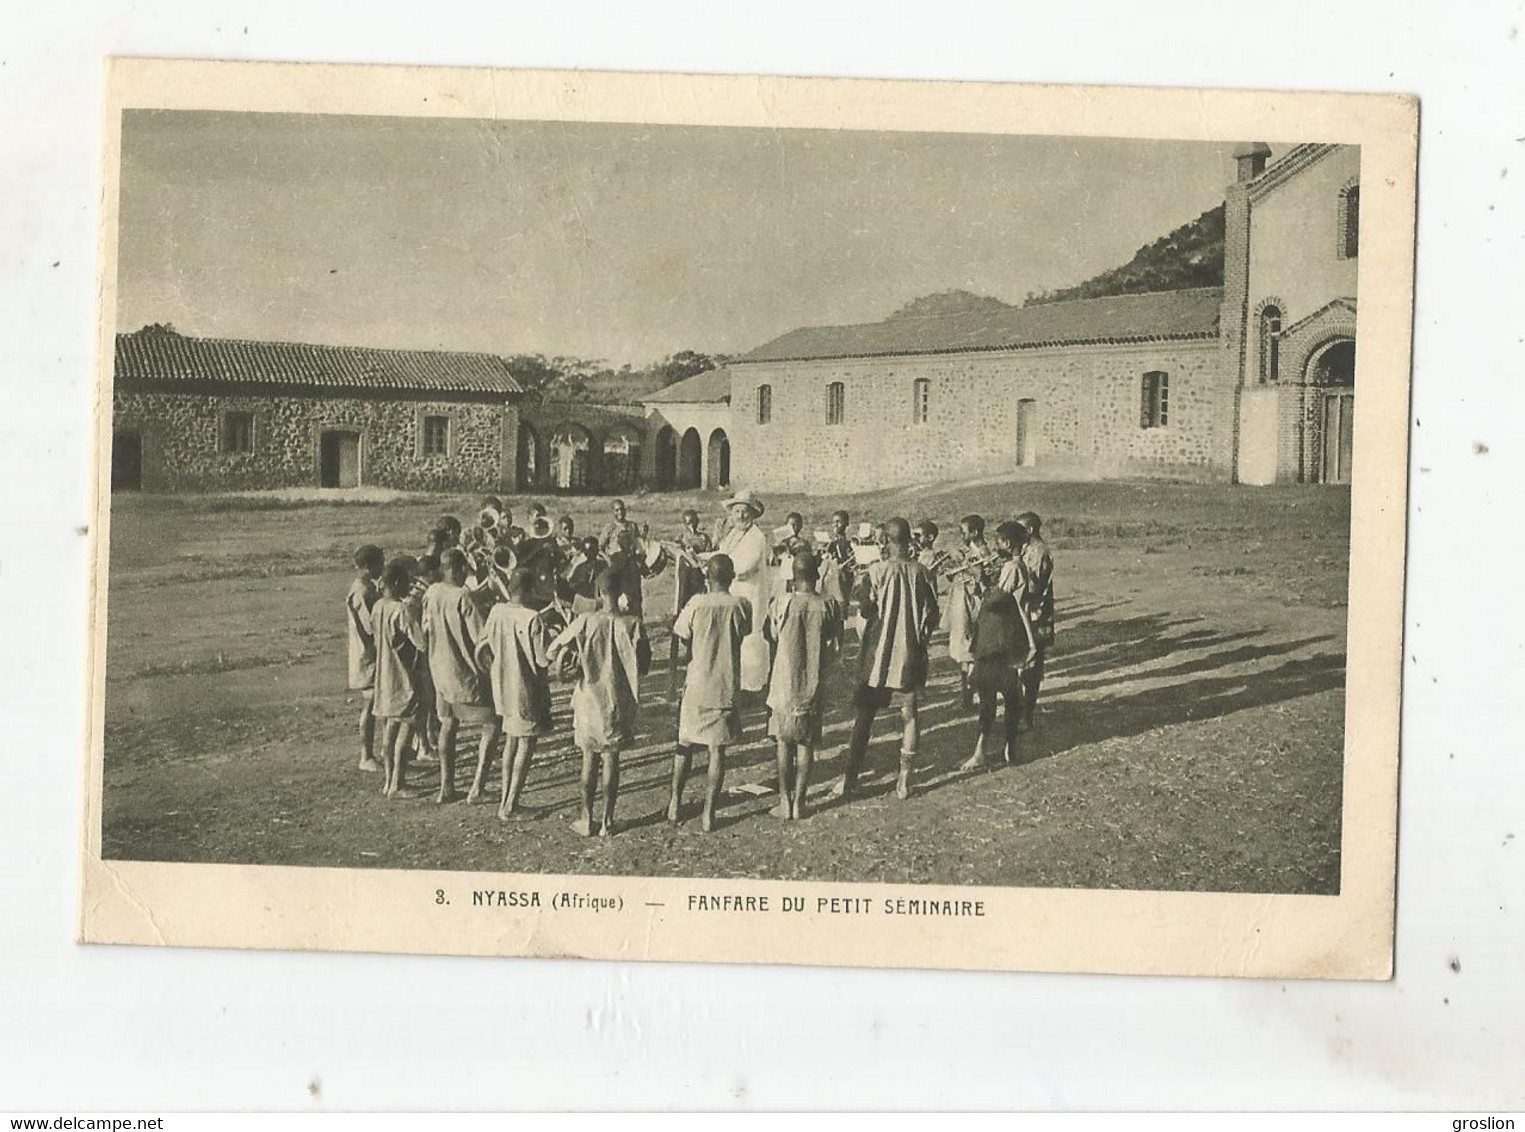 NYASSA (AFRIQUE) 3 FANFARE DU PETIT SEMINAIRE (BELLE ANIMATION)  1946 - Mosambik